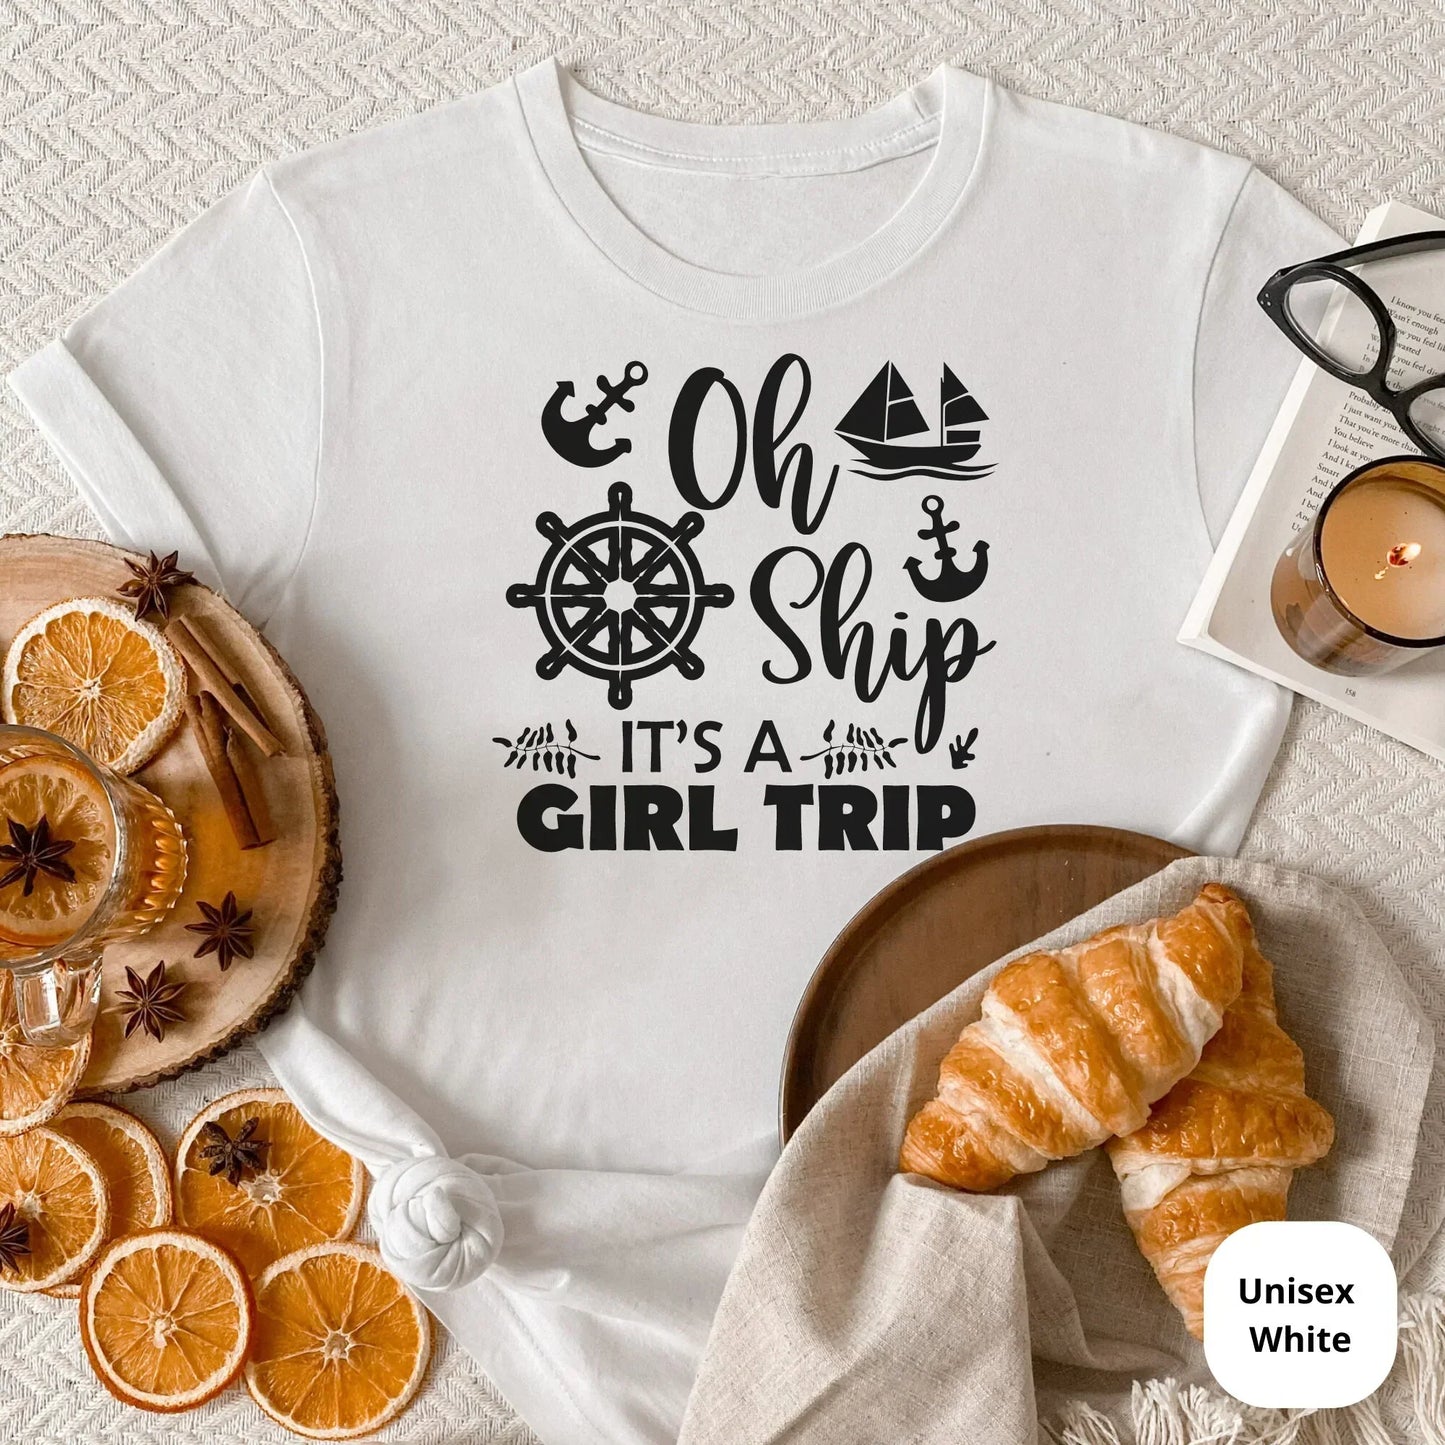 Oh Ship It's a Girls Trip Shirt, Gift for Girls Trip HMDesignStudioUS